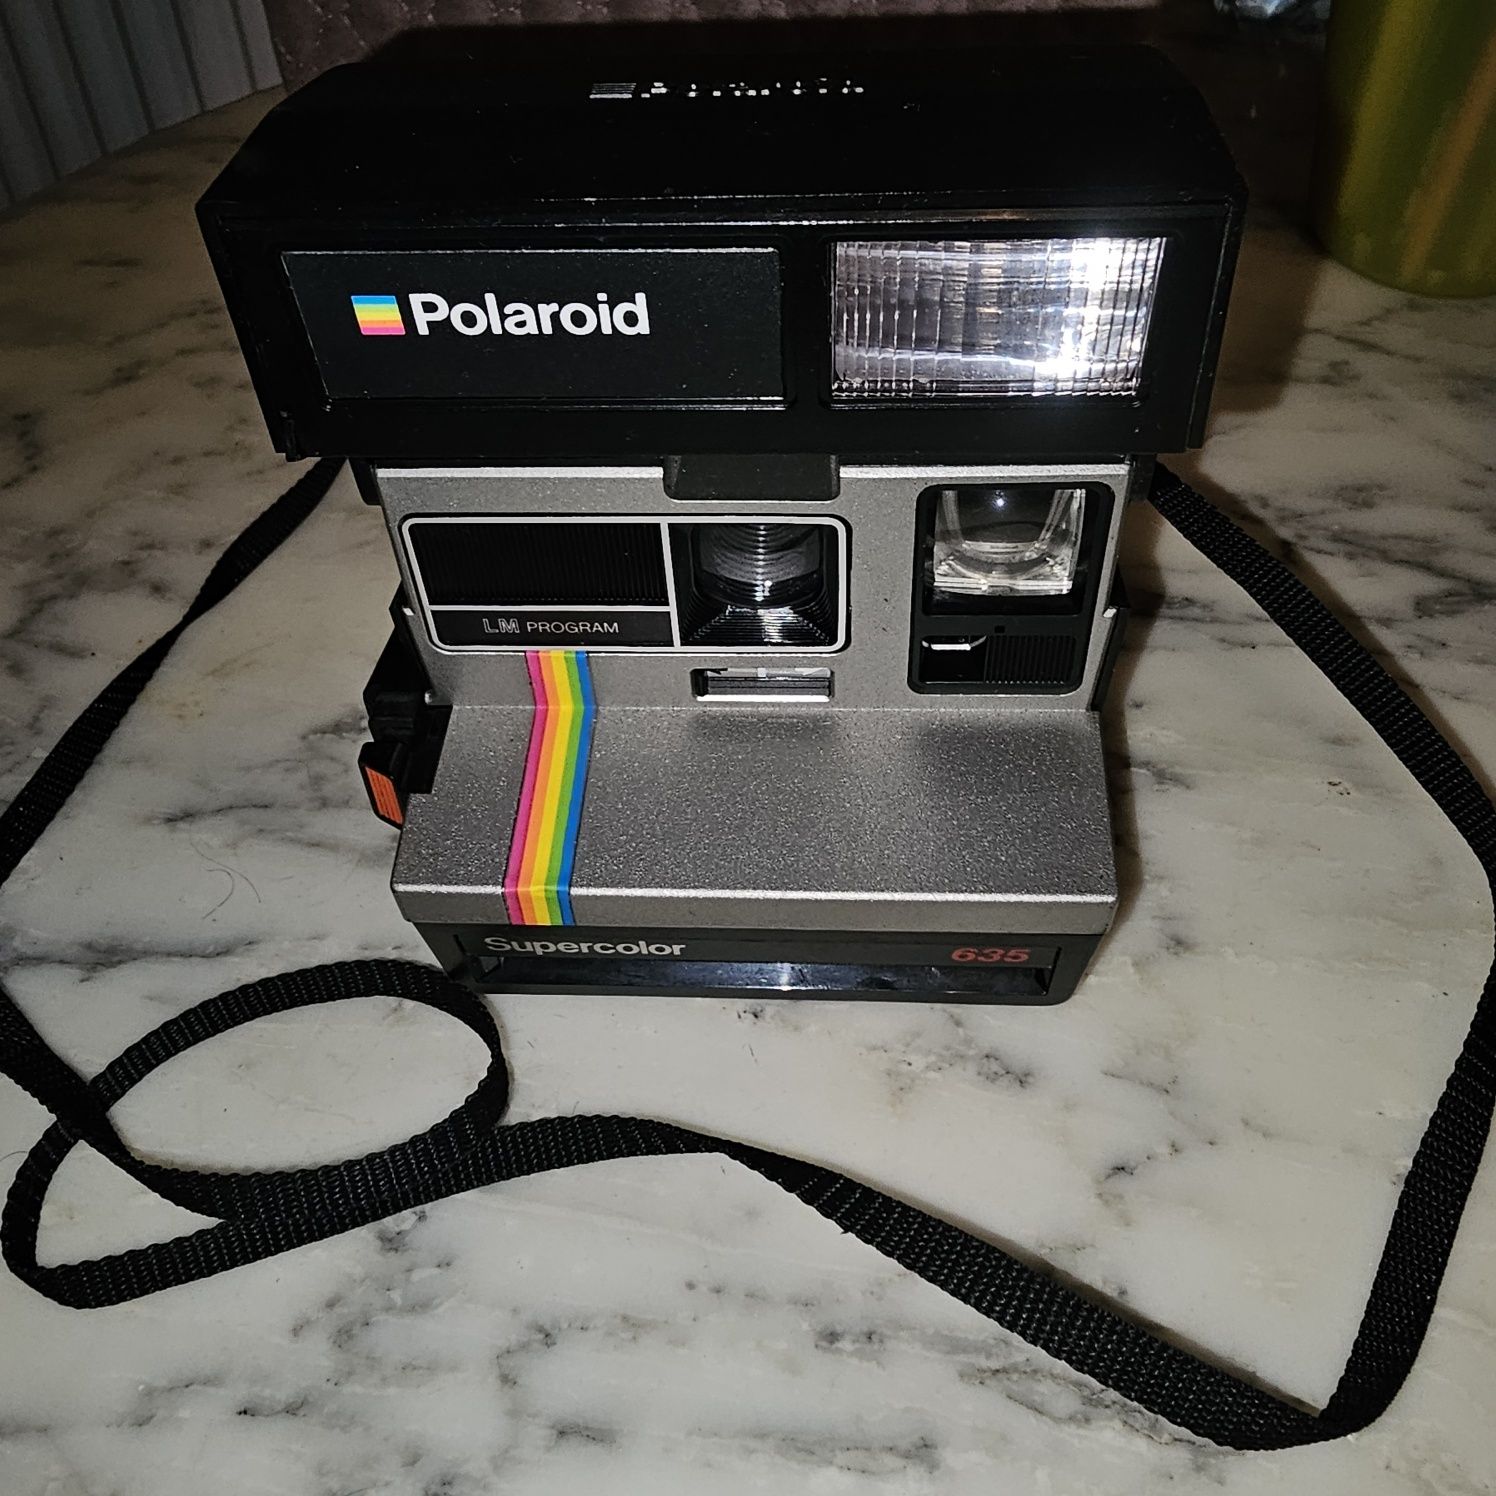 Polaroid LM Program Supercolor 635